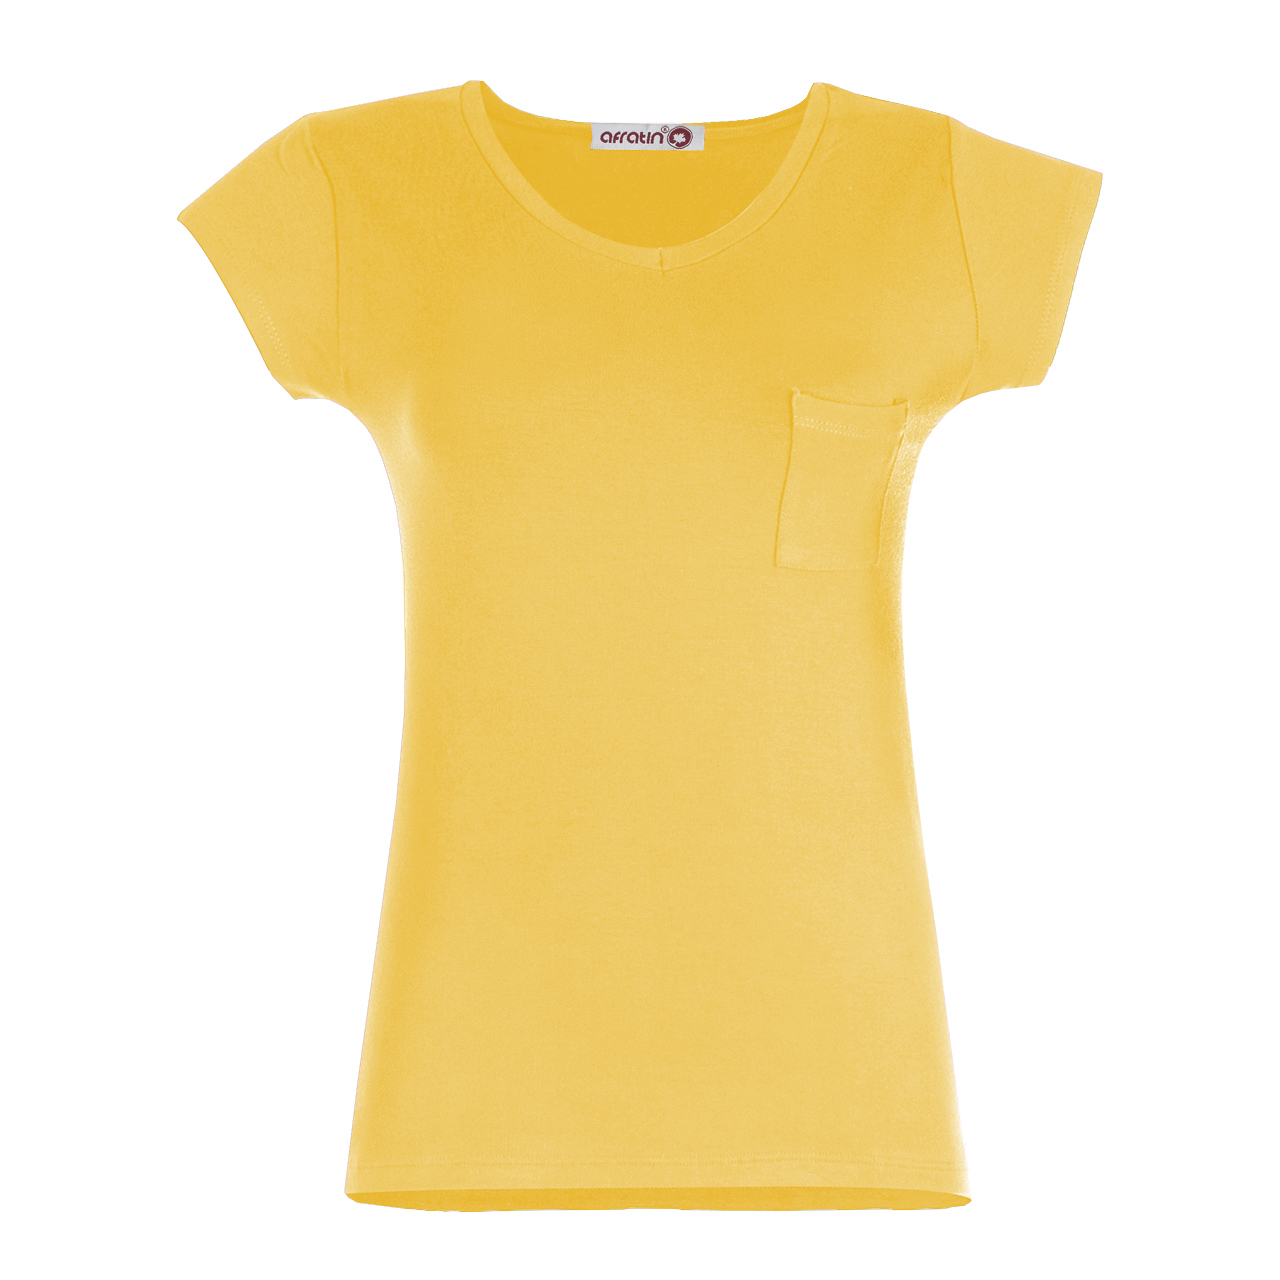  تی شرت زنانه افراتین کد 2515 رنگ زرد -  - 1